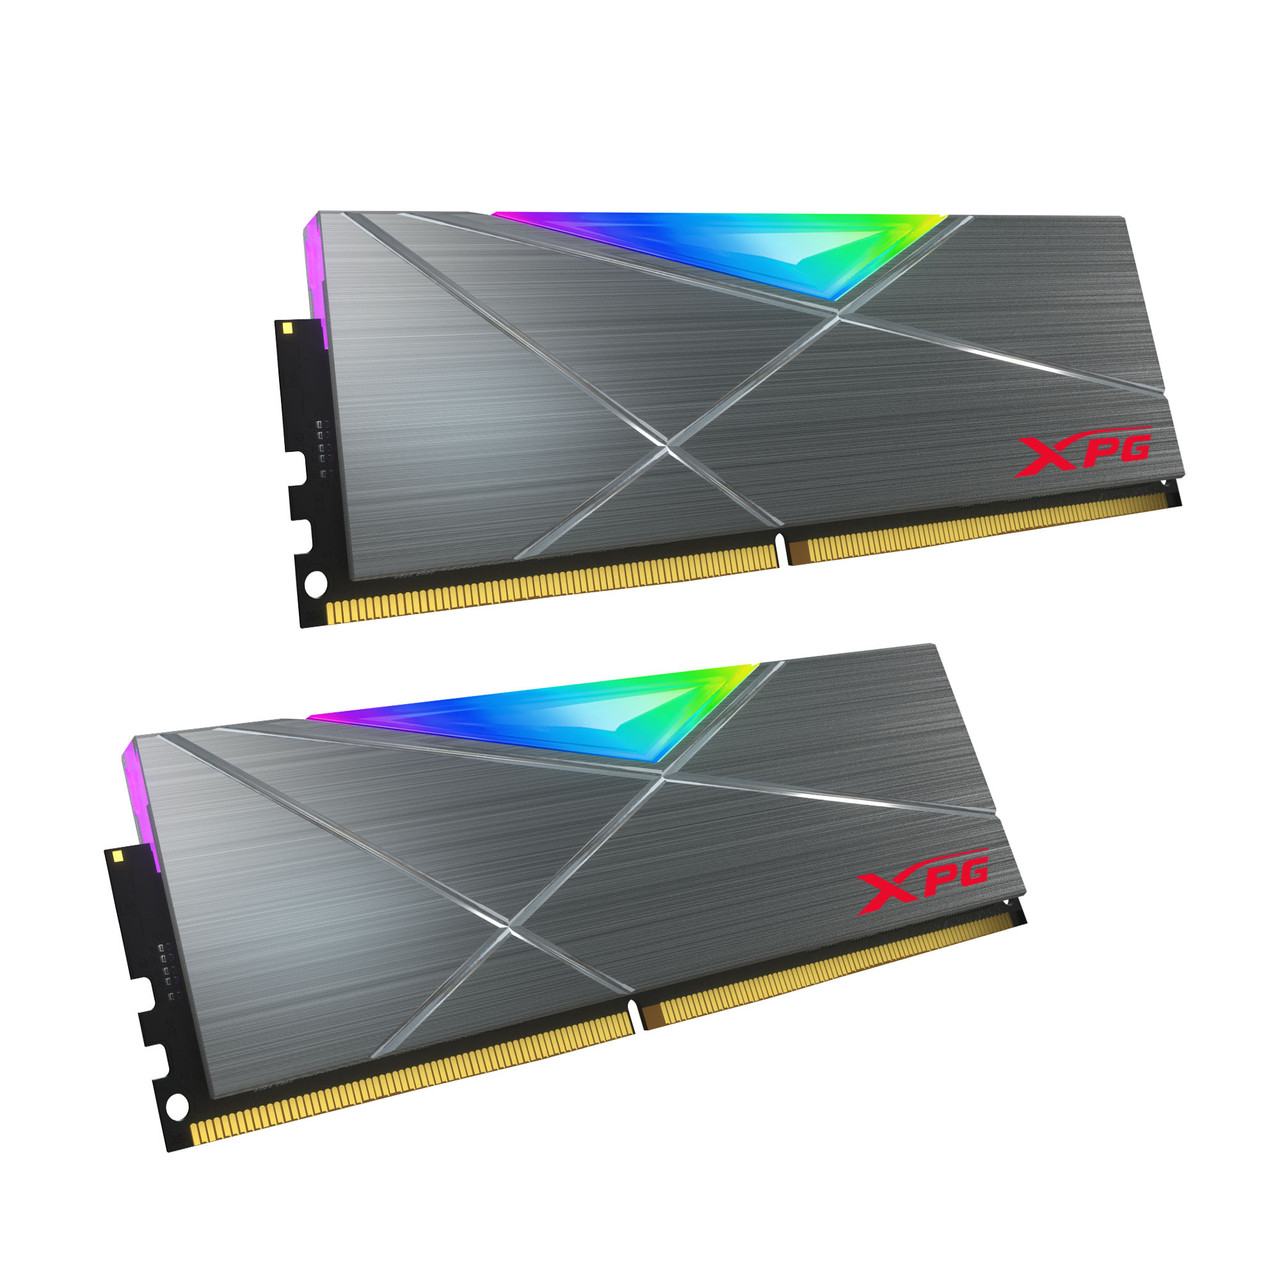 XPG Spectrix D50 16GB (8GBX2) DDR4 3200MHz Grey RGB RAM